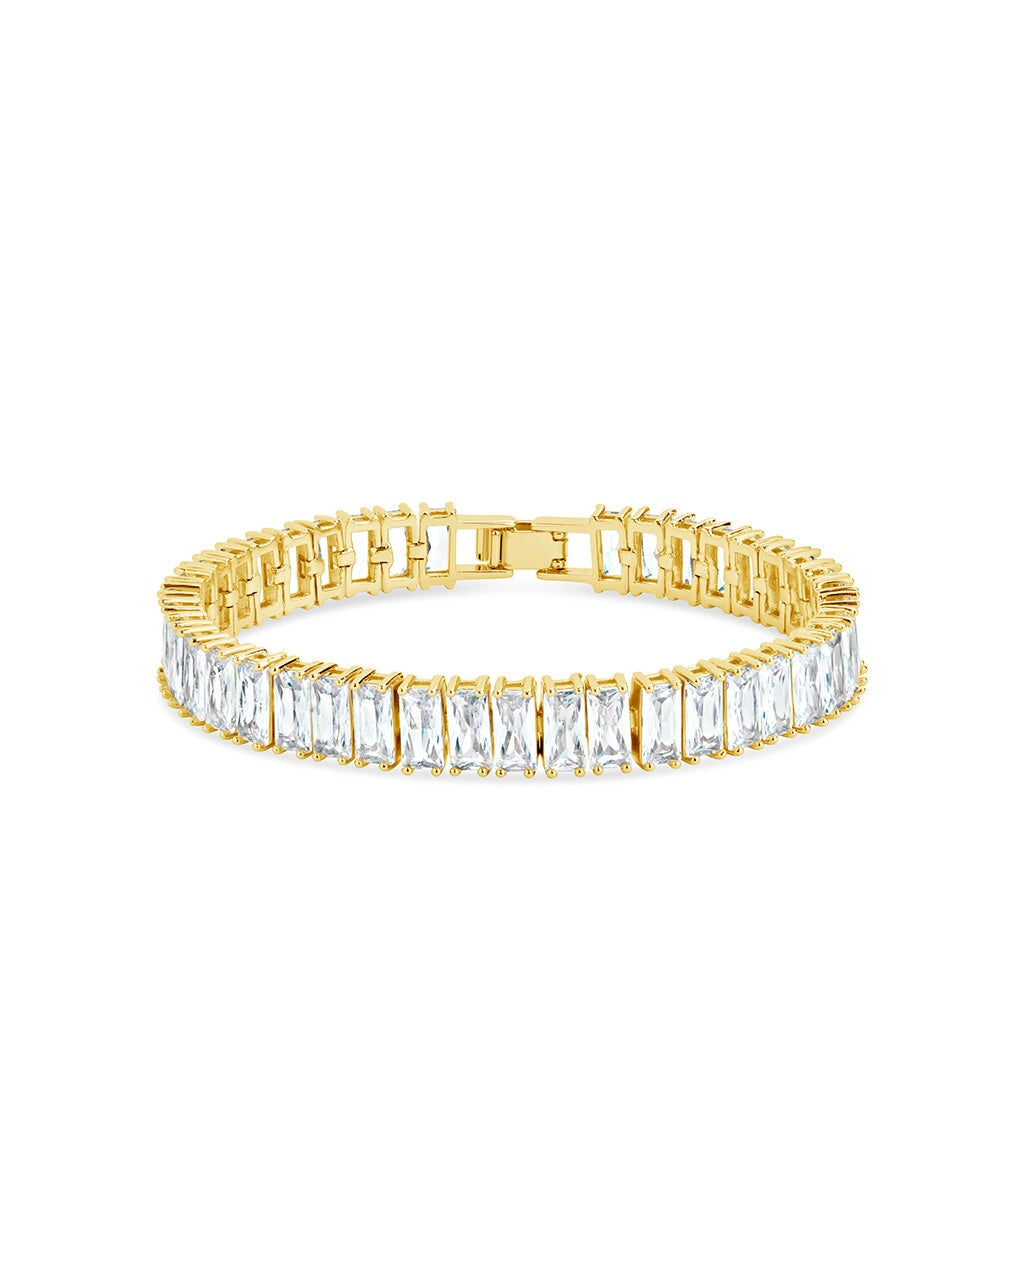 Martha CZ Tennis Bracelet Bracelet Sterling Forever Gold 